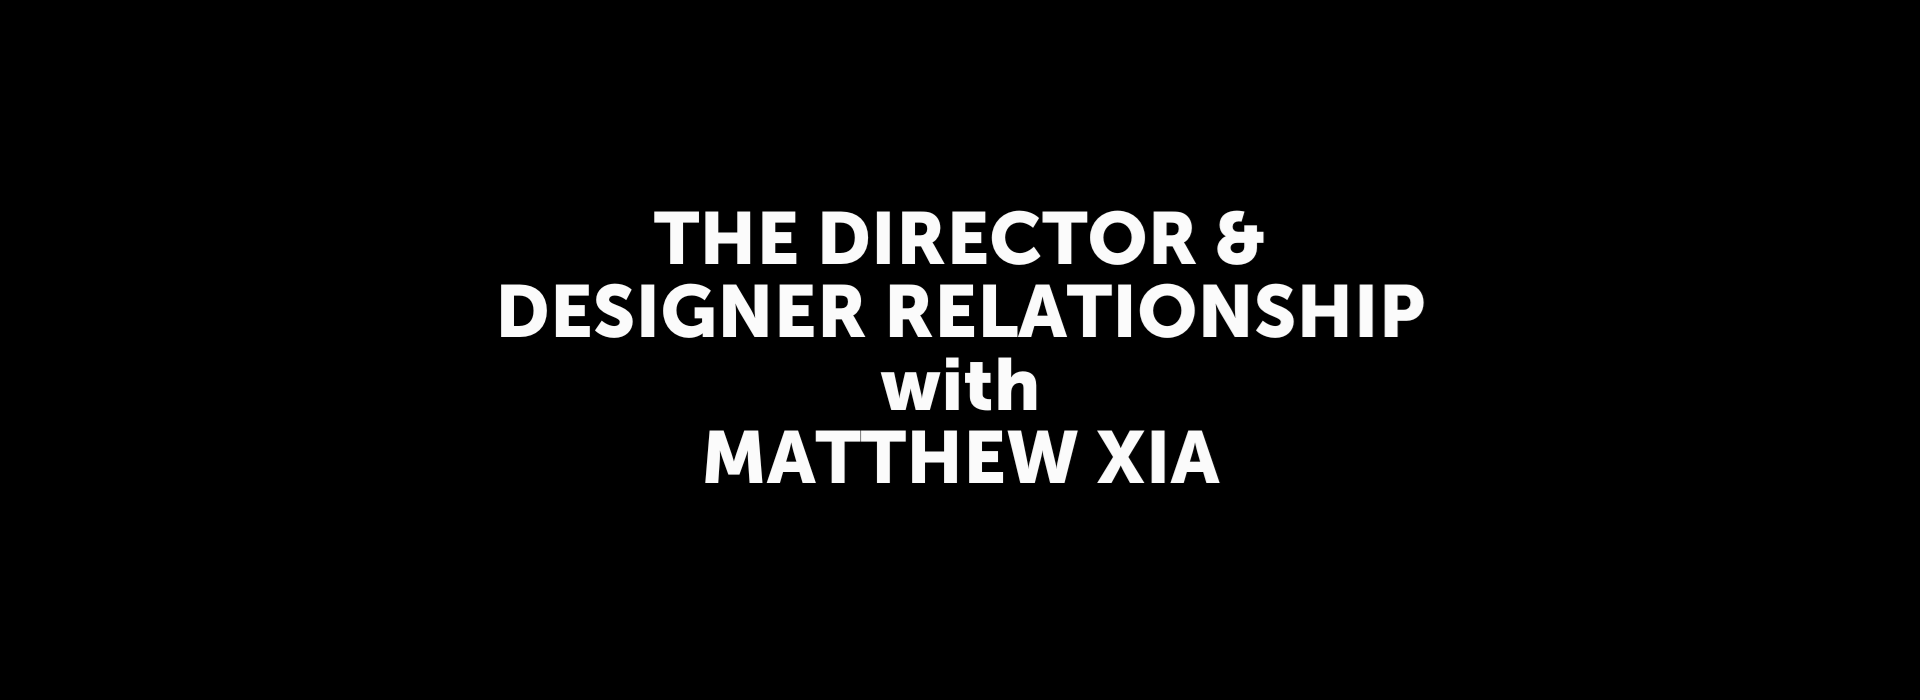 The Director & Designer Relationship with Matthew Xia